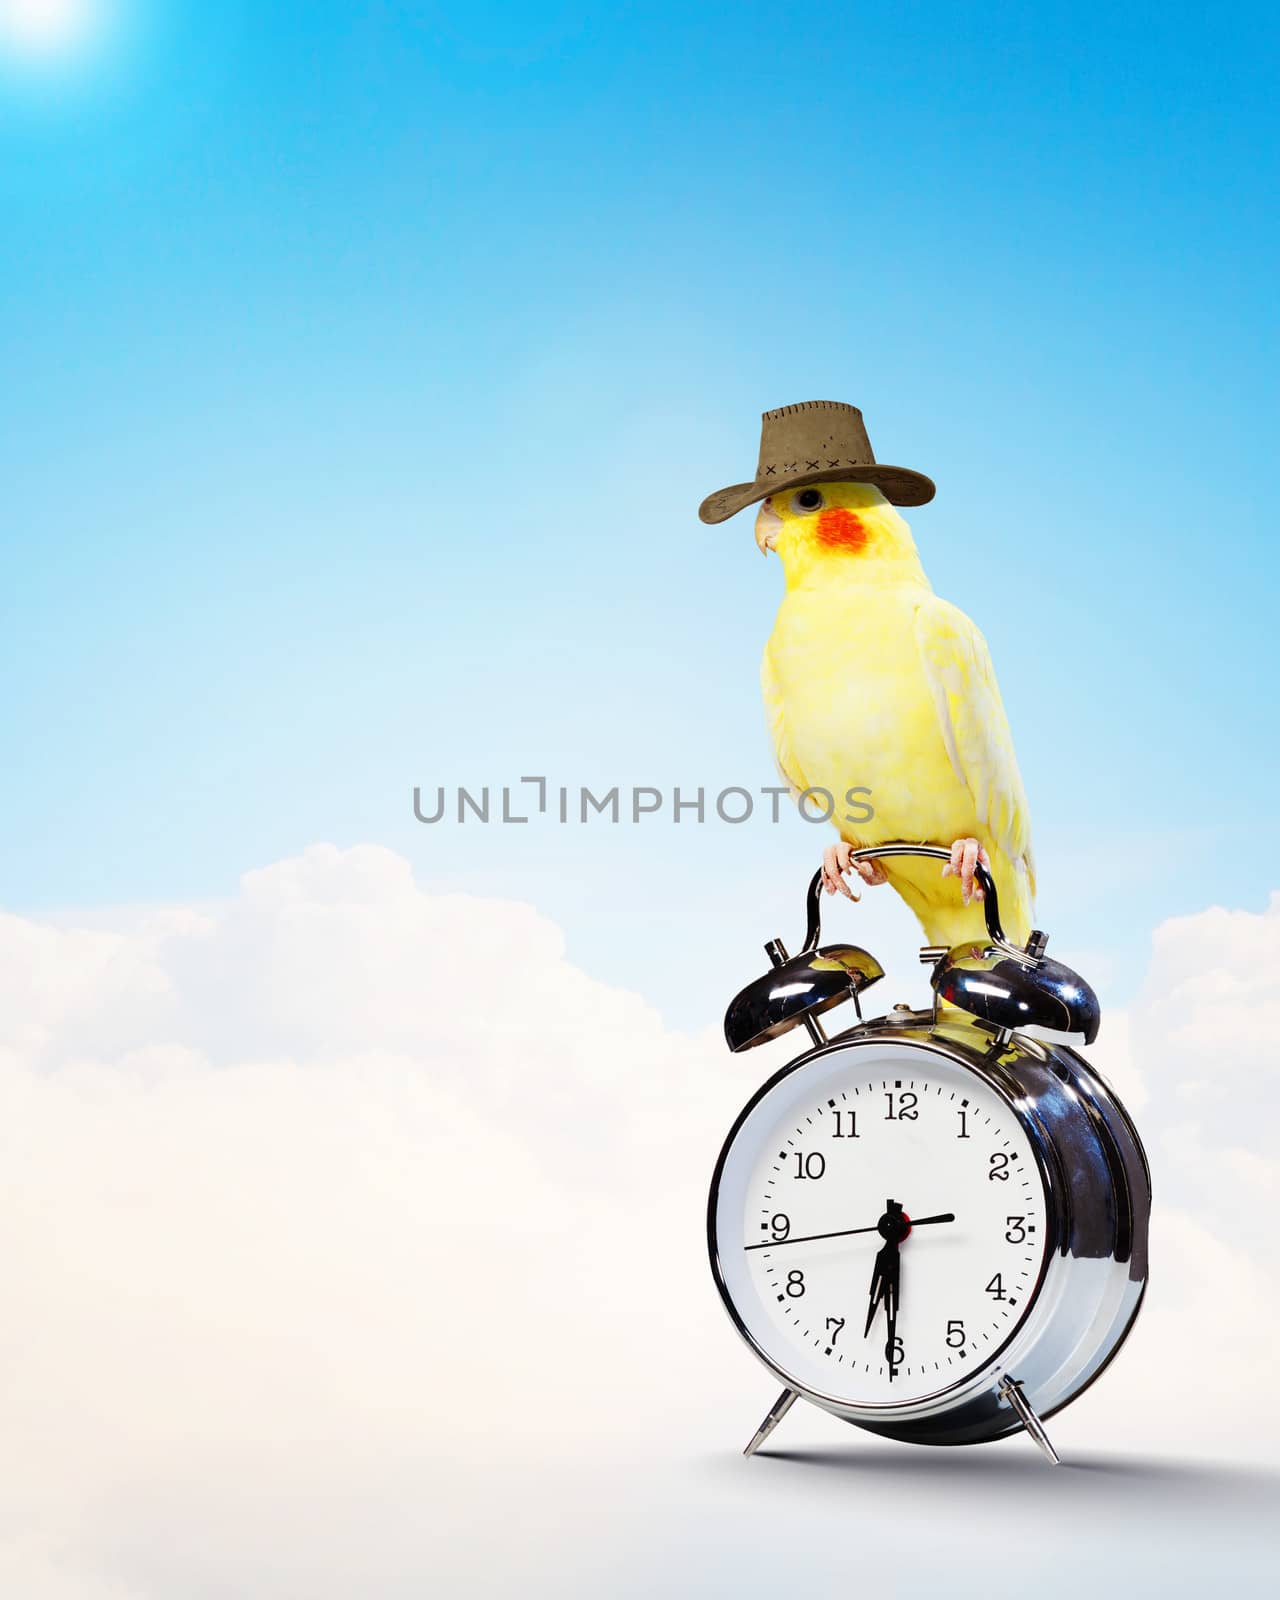 Image of yellow parrot sitting on alarm clock